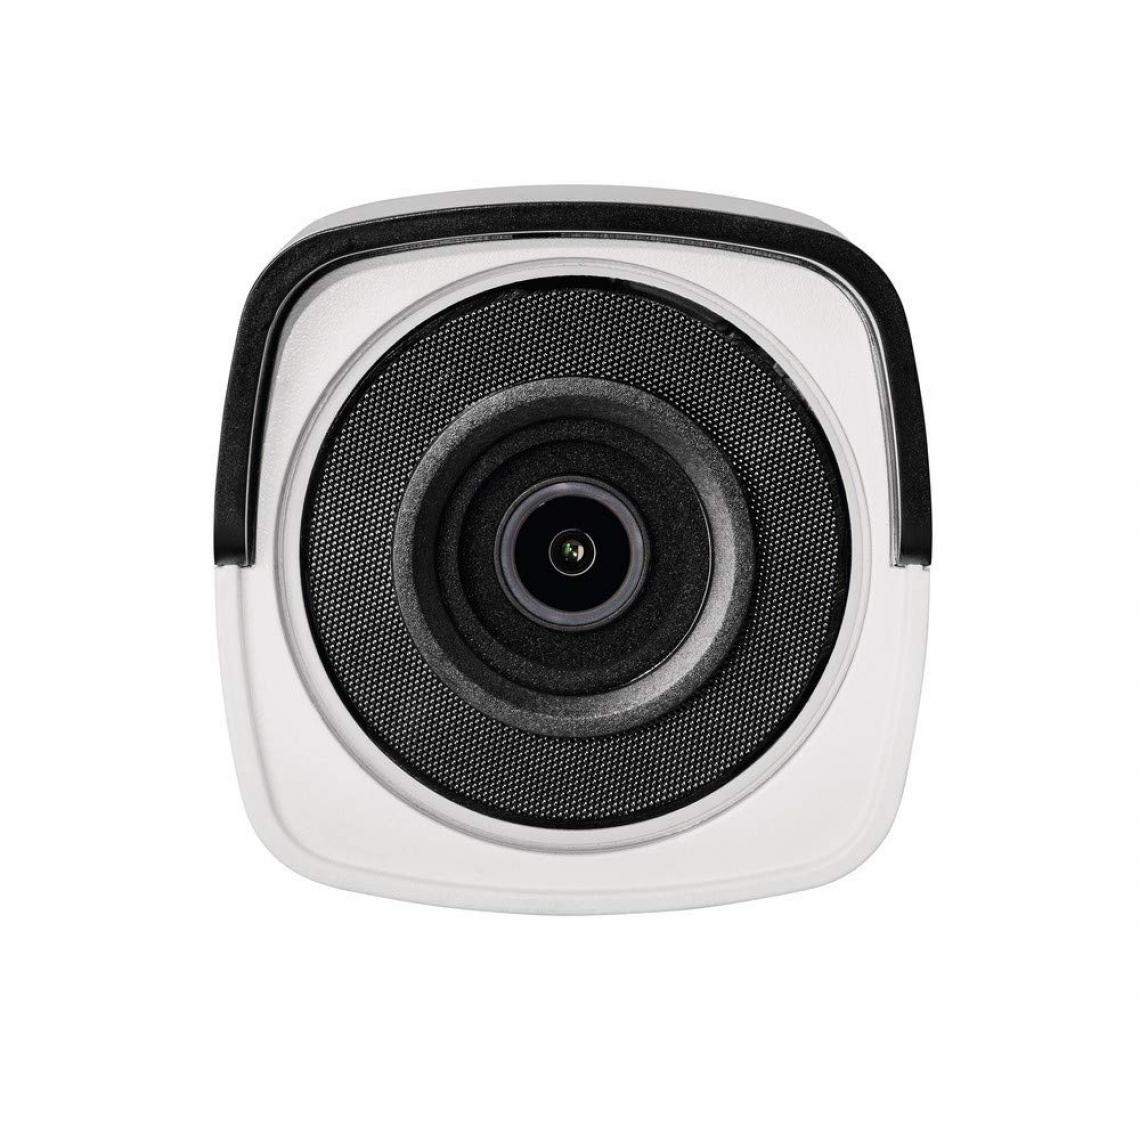 Inconnu - ABUS TVIP64510 Ethernet IP Caméra de surveillance 2560 x 1440 pixels - Caméra de surveillance connectée